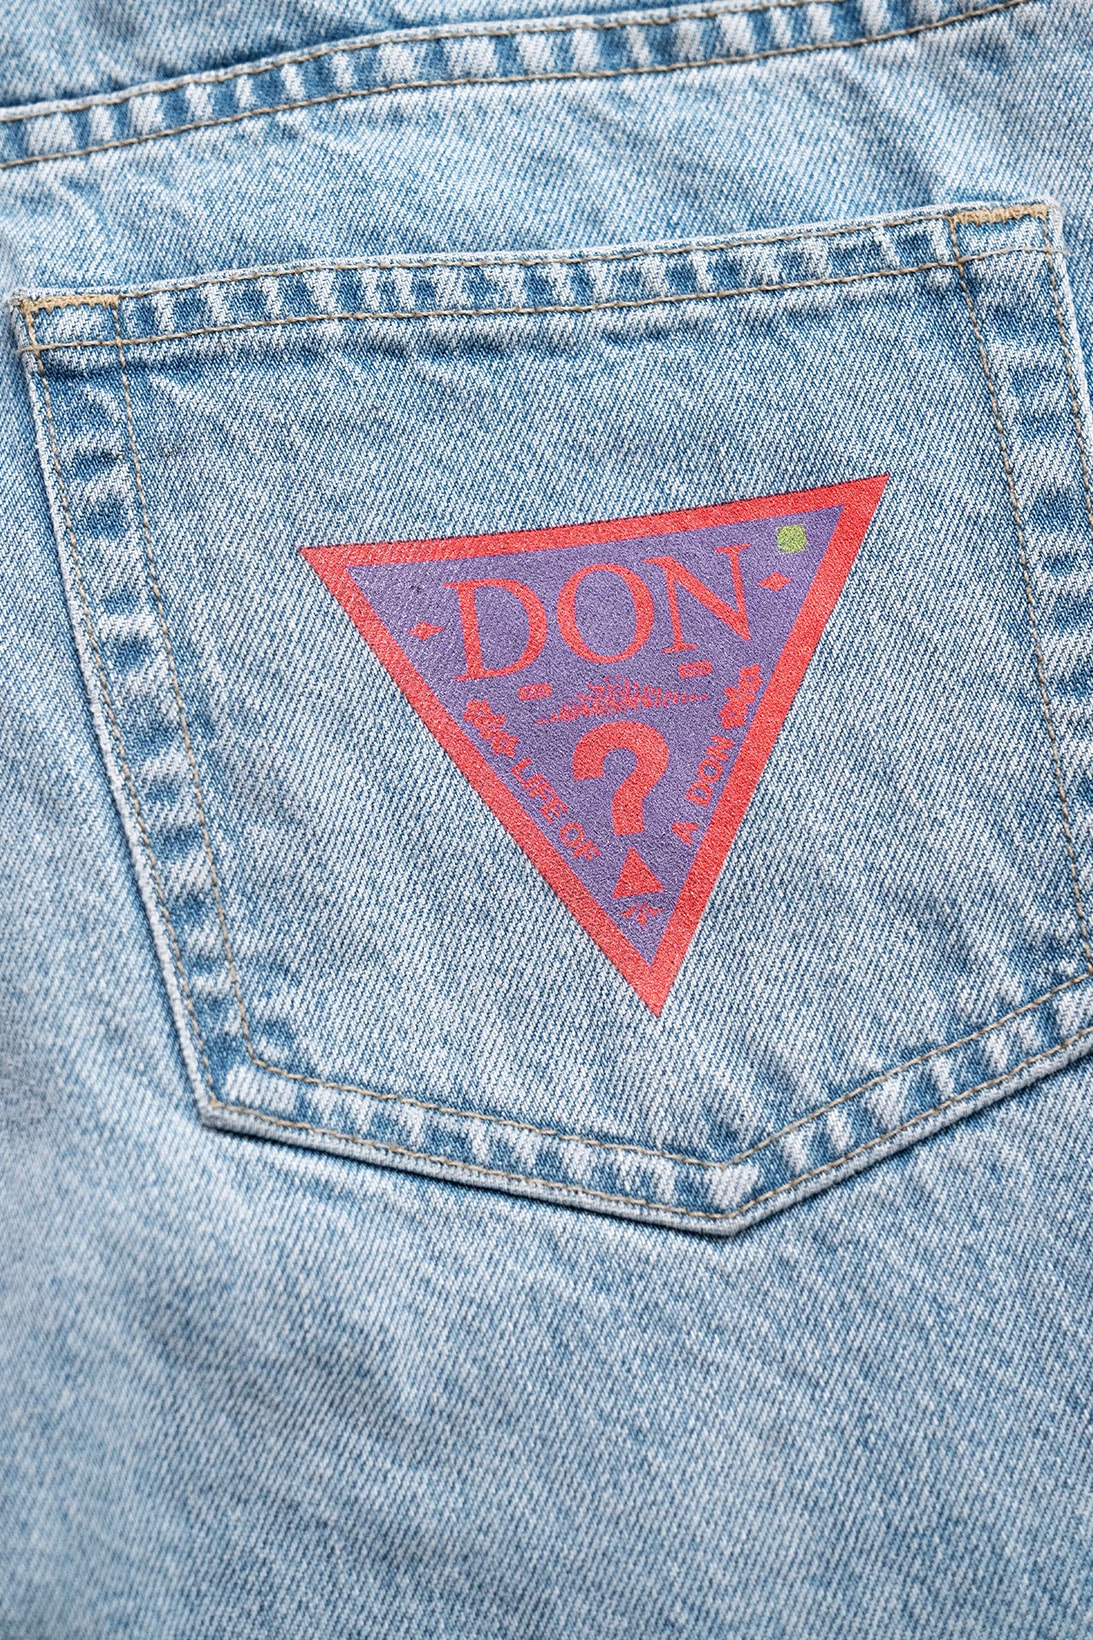 GUESS Originals Don Toliver Life of a Album Merch Jeans Denim Pocket Back Detail